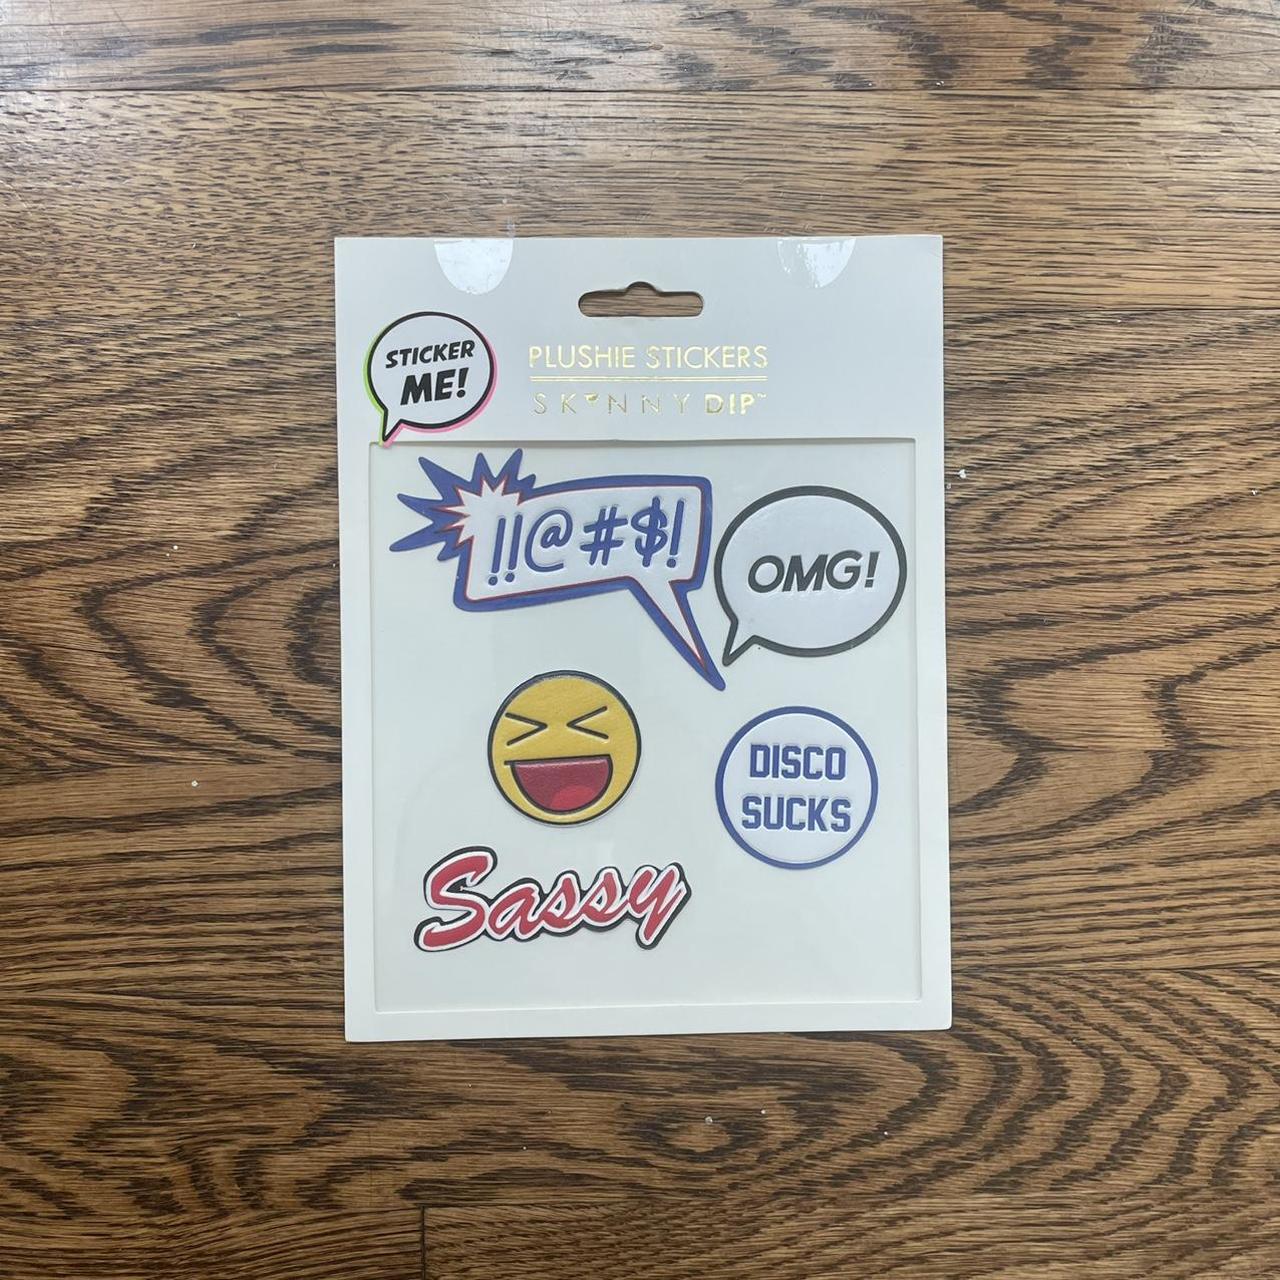 Product Image 2 - Skinny Dip plushie stickers. Brand